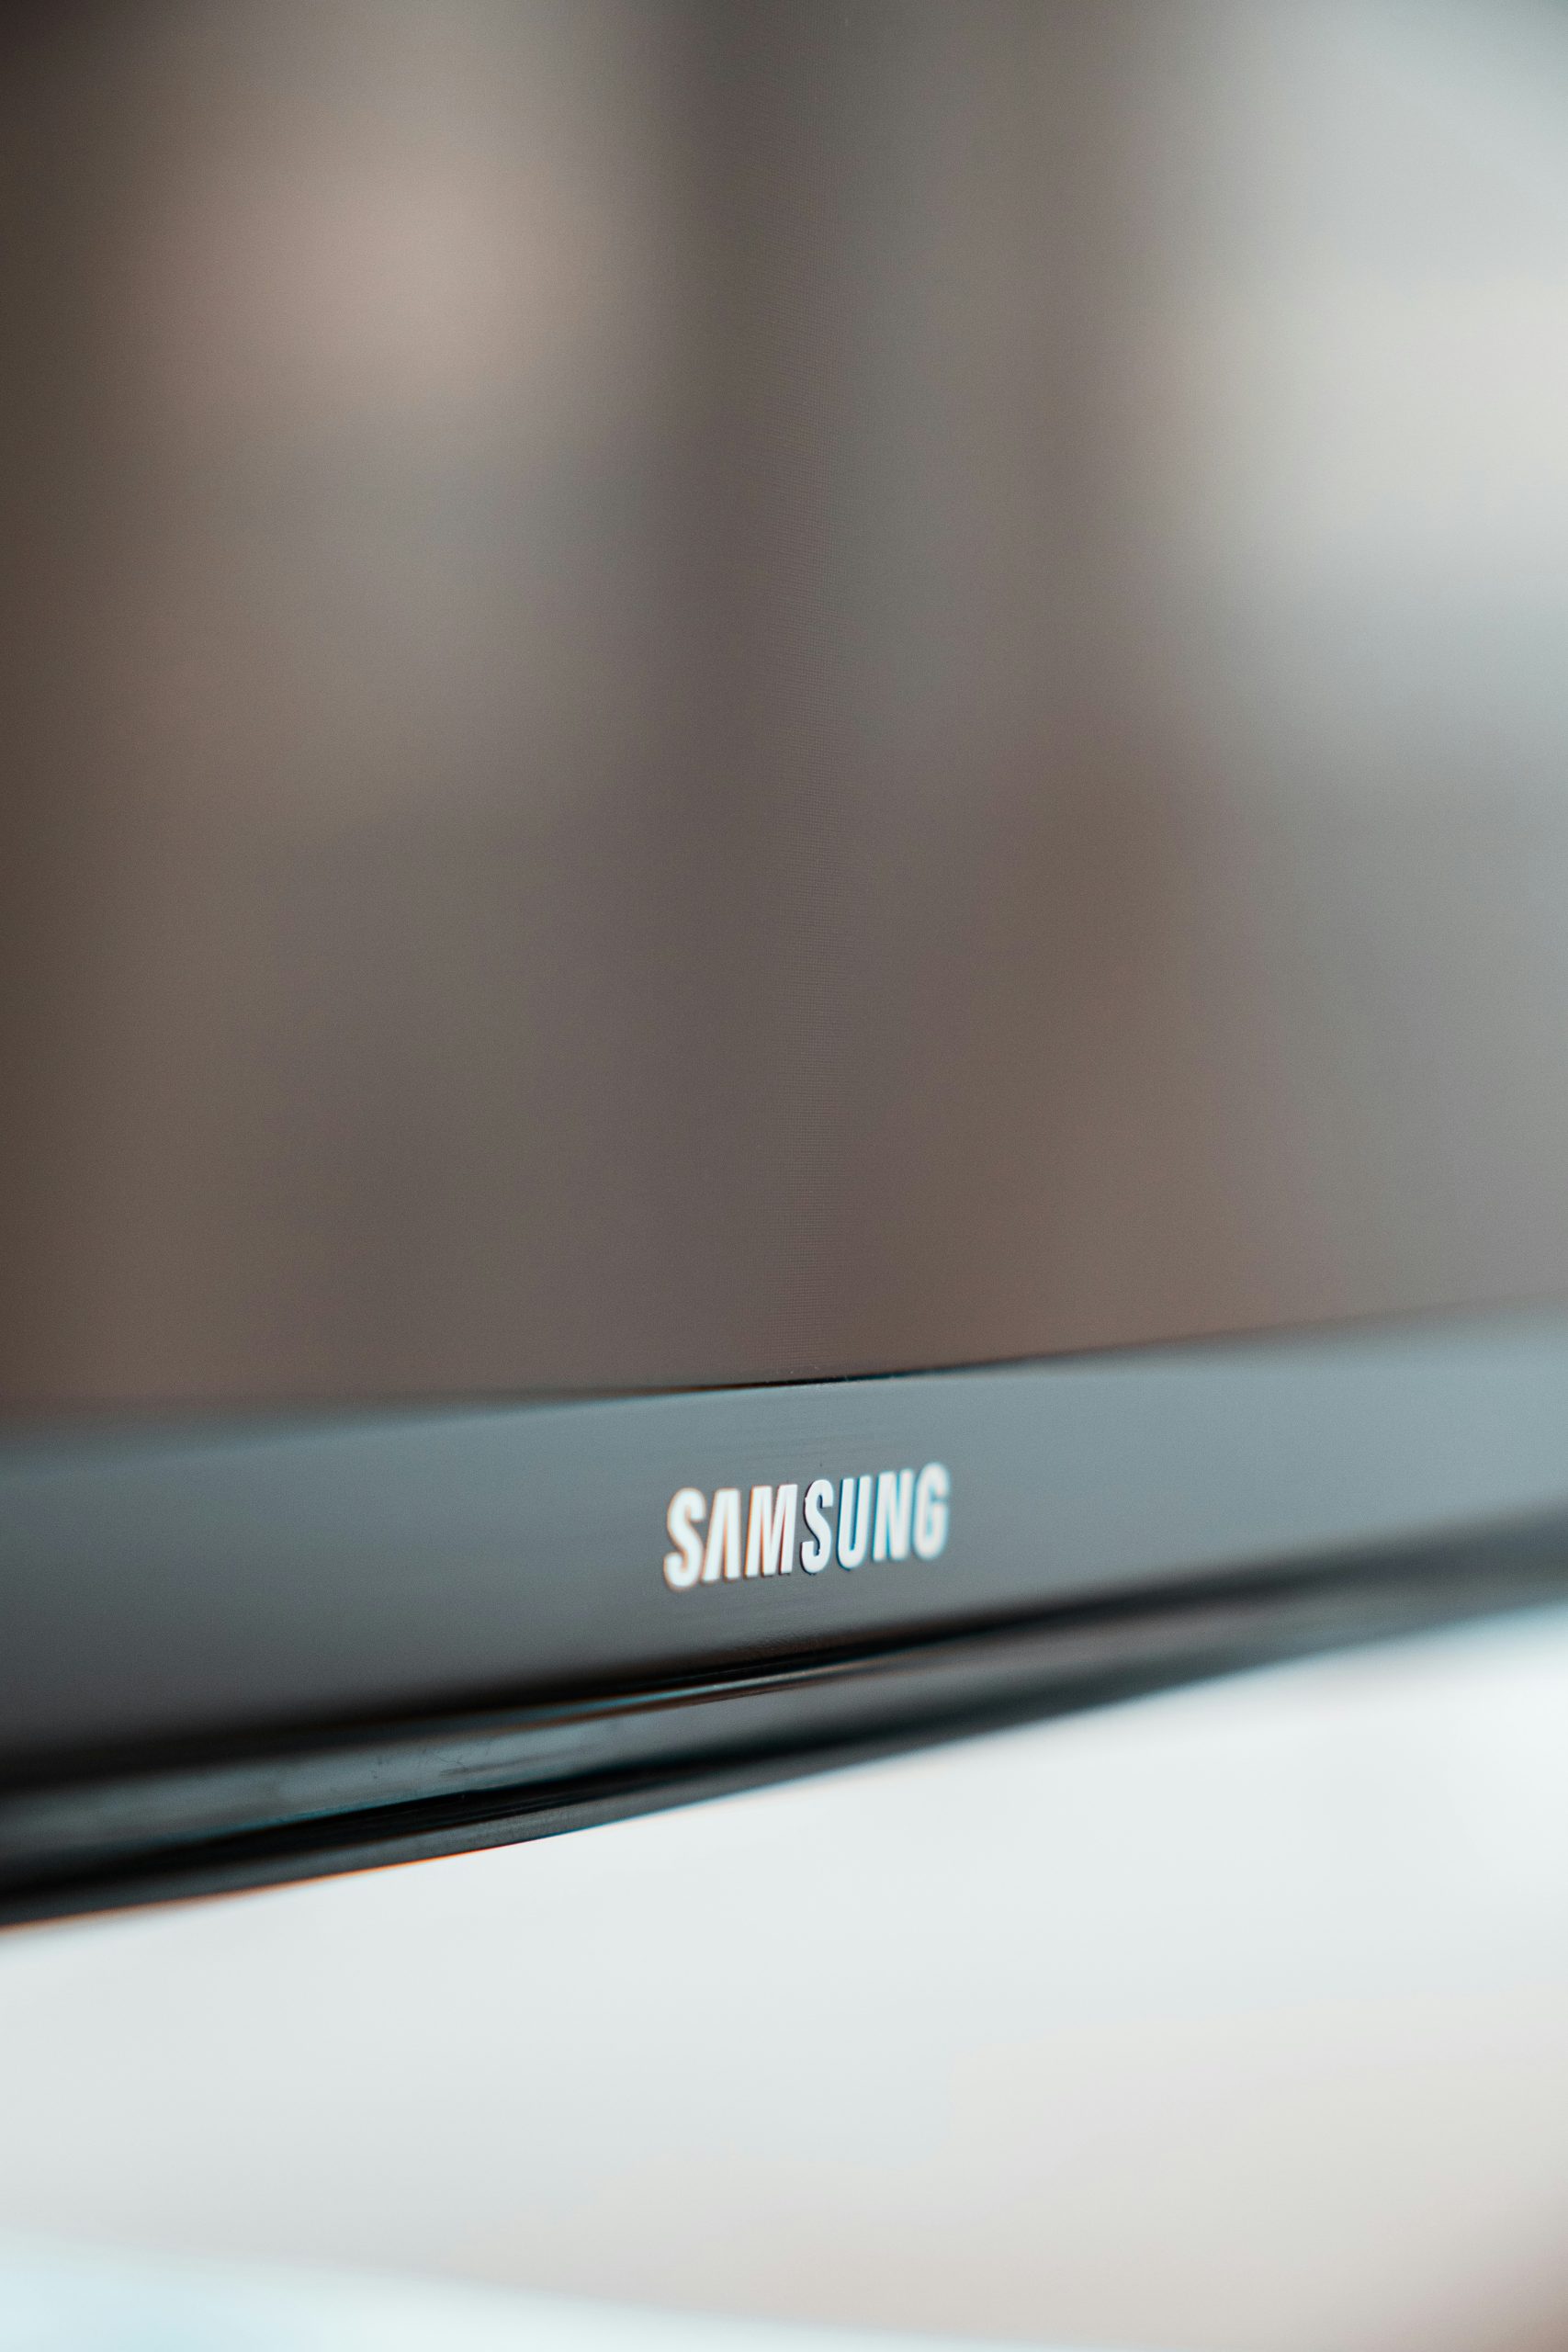 How Do You Fix A Pixelated Samsung TV